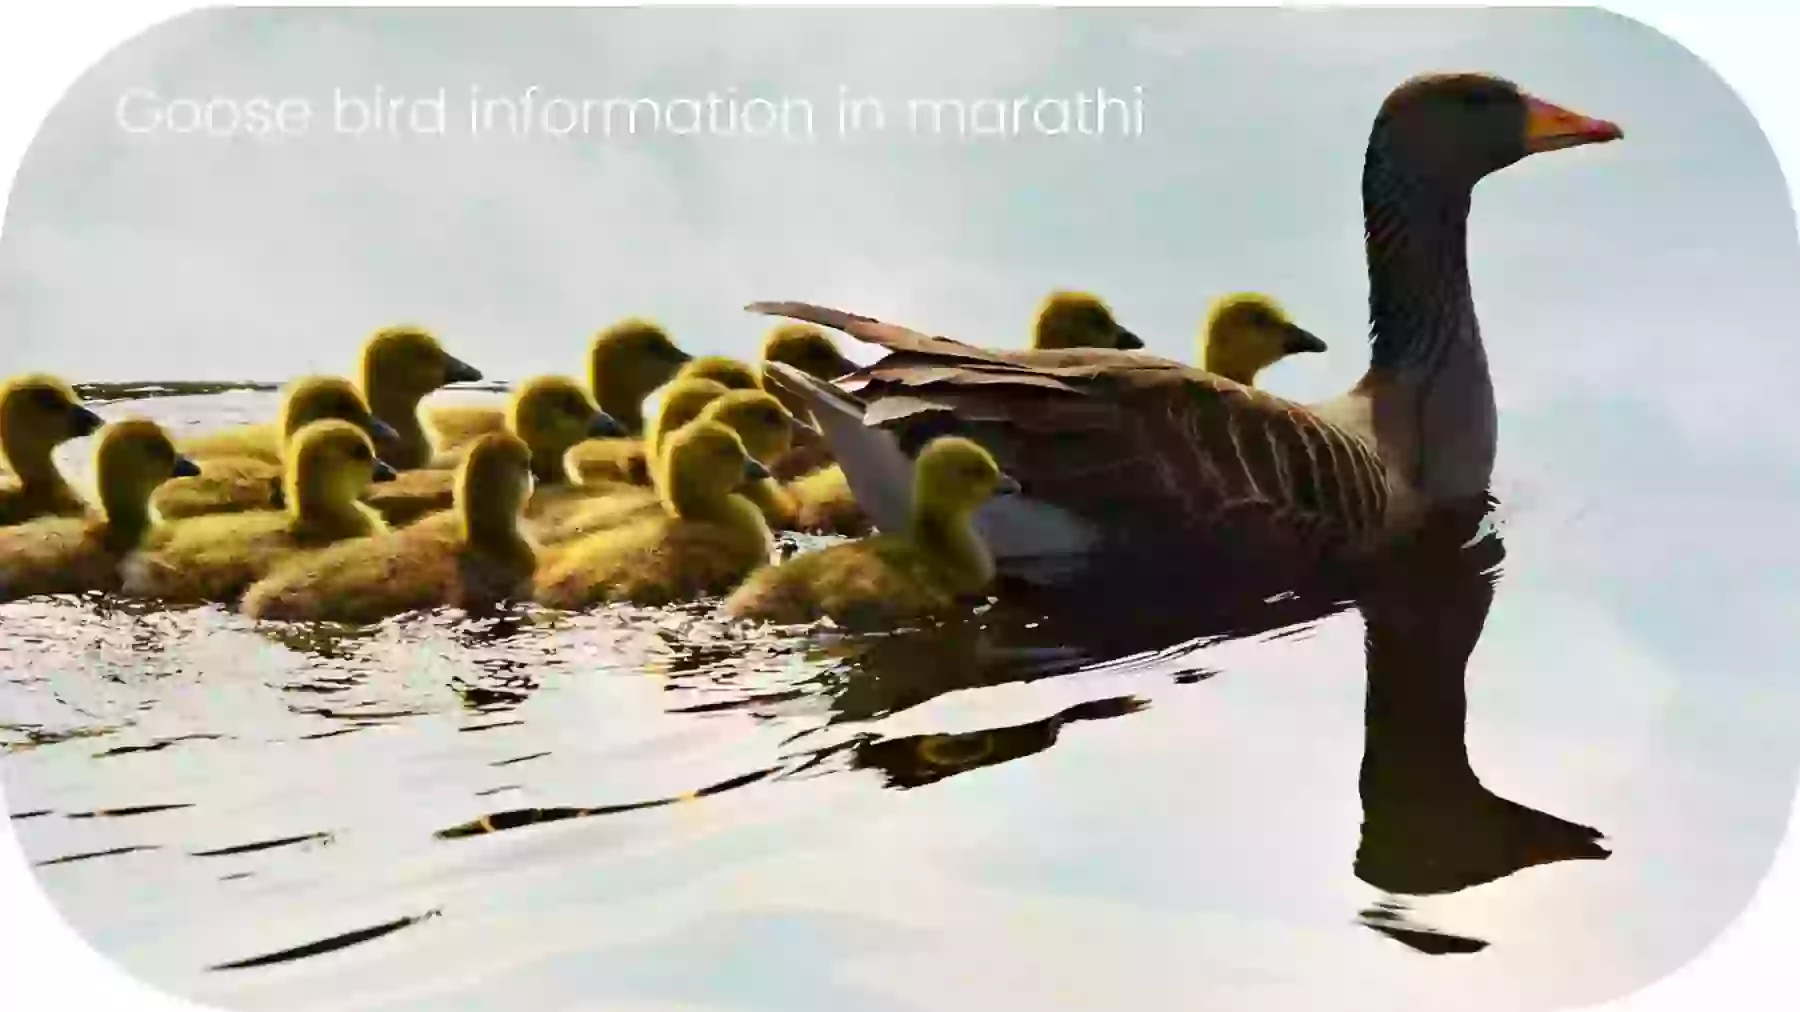 Goose bird information in marathi